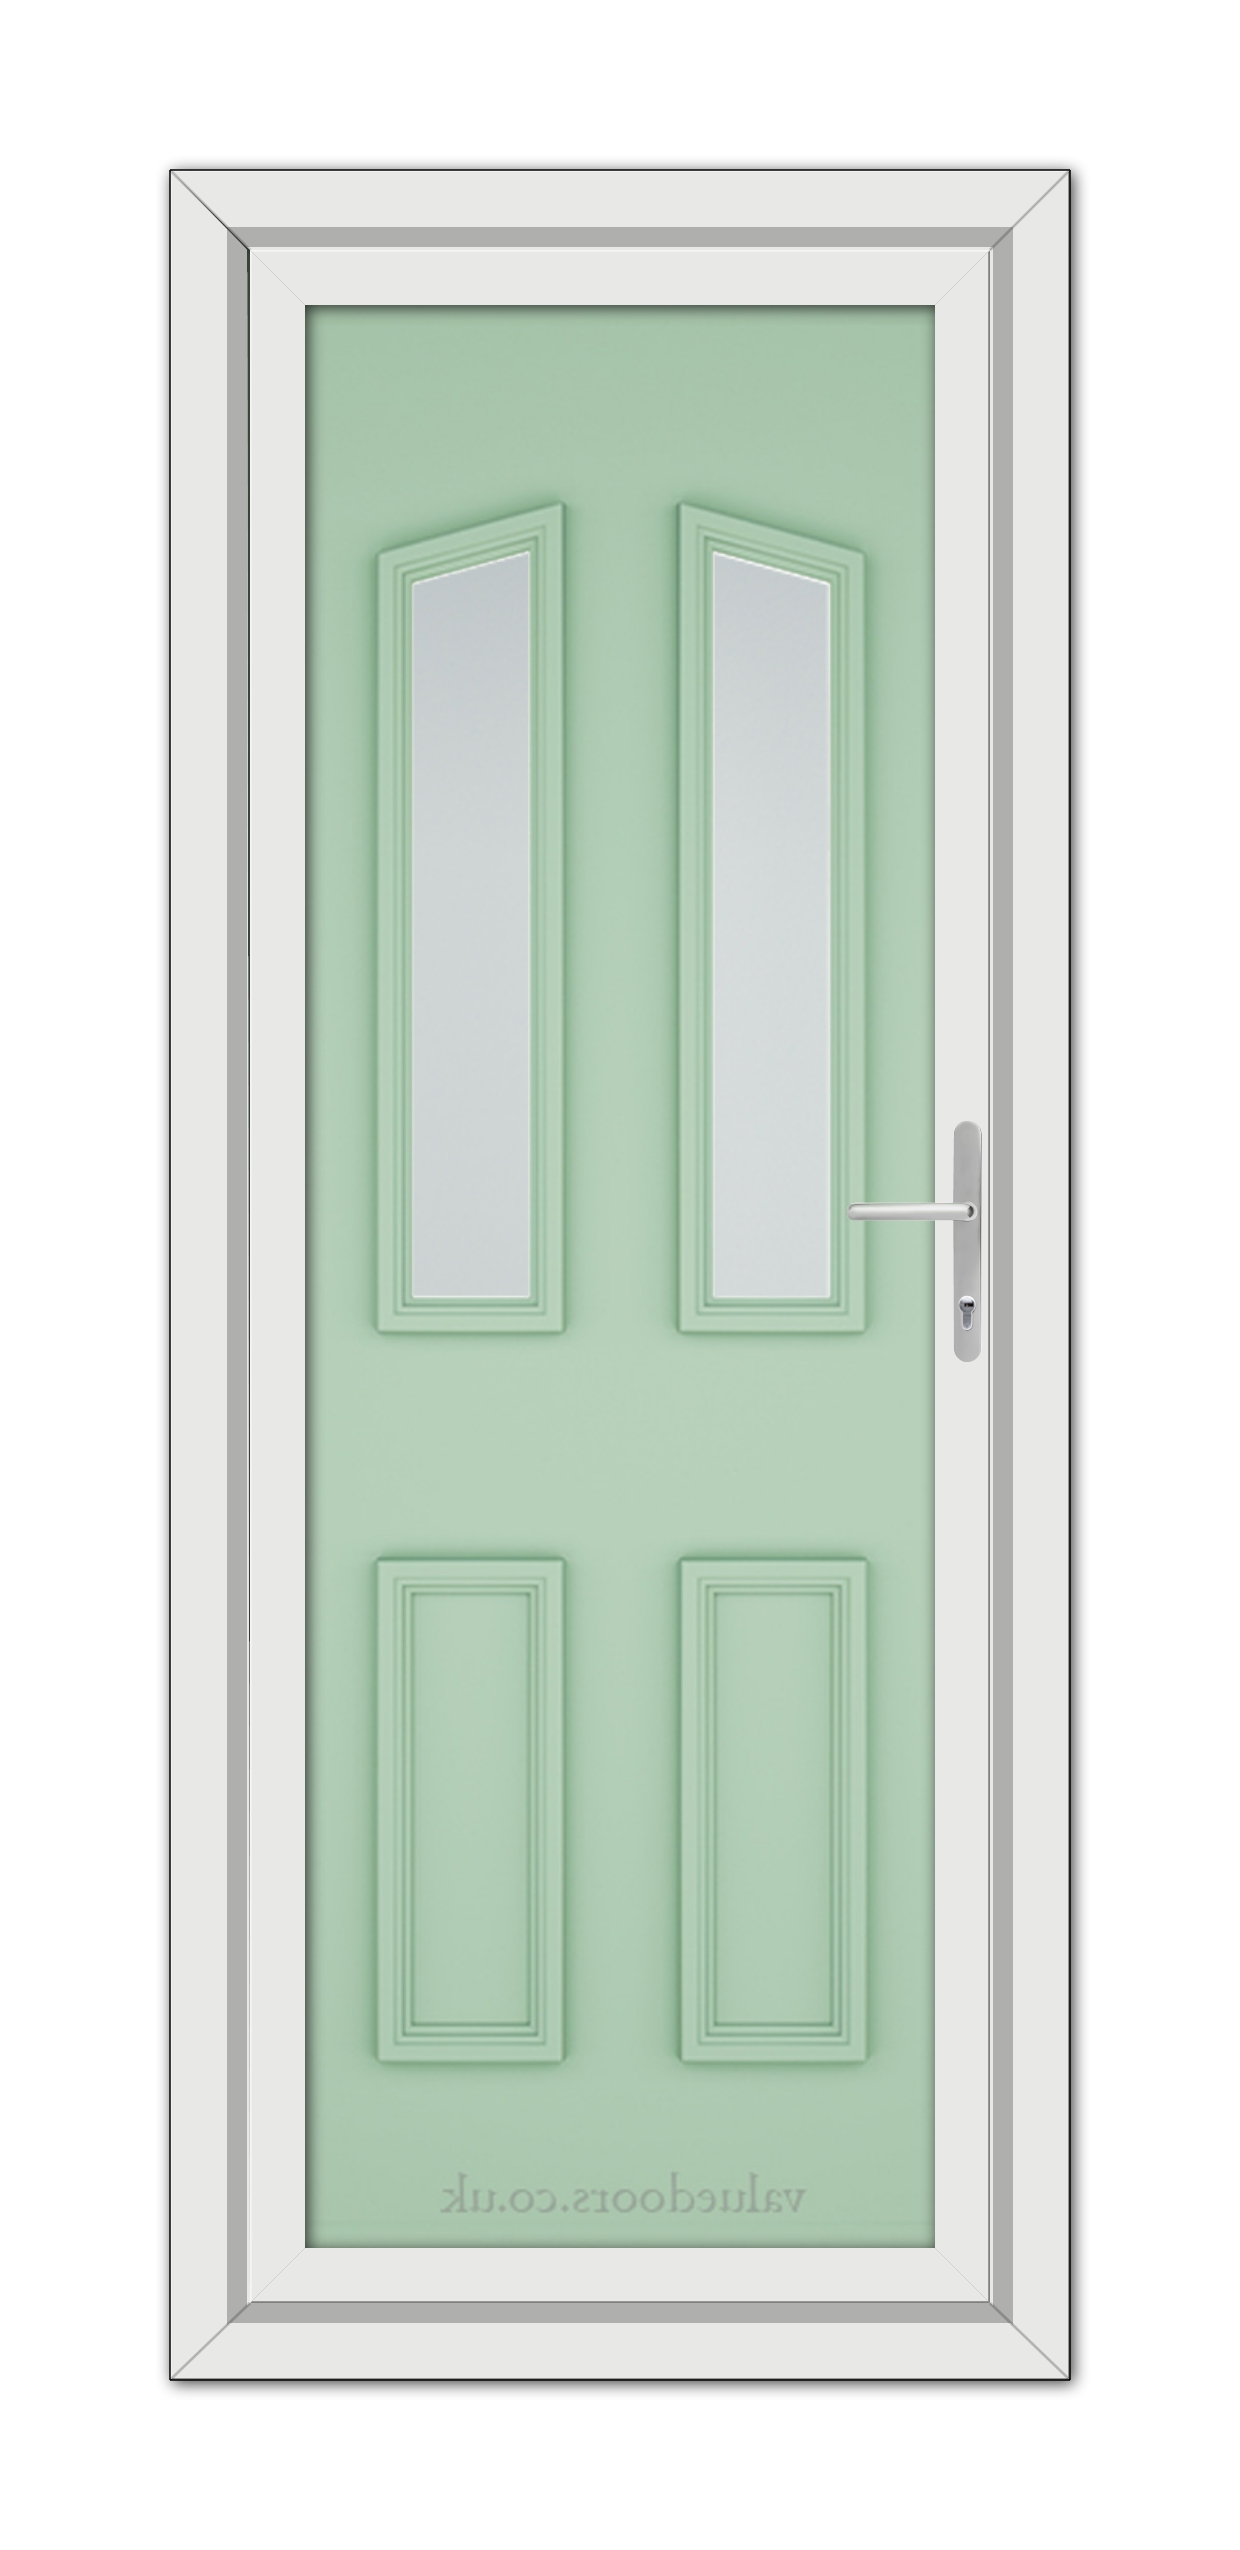 A Chartwell Green Kensington uPVC door with glass panels.